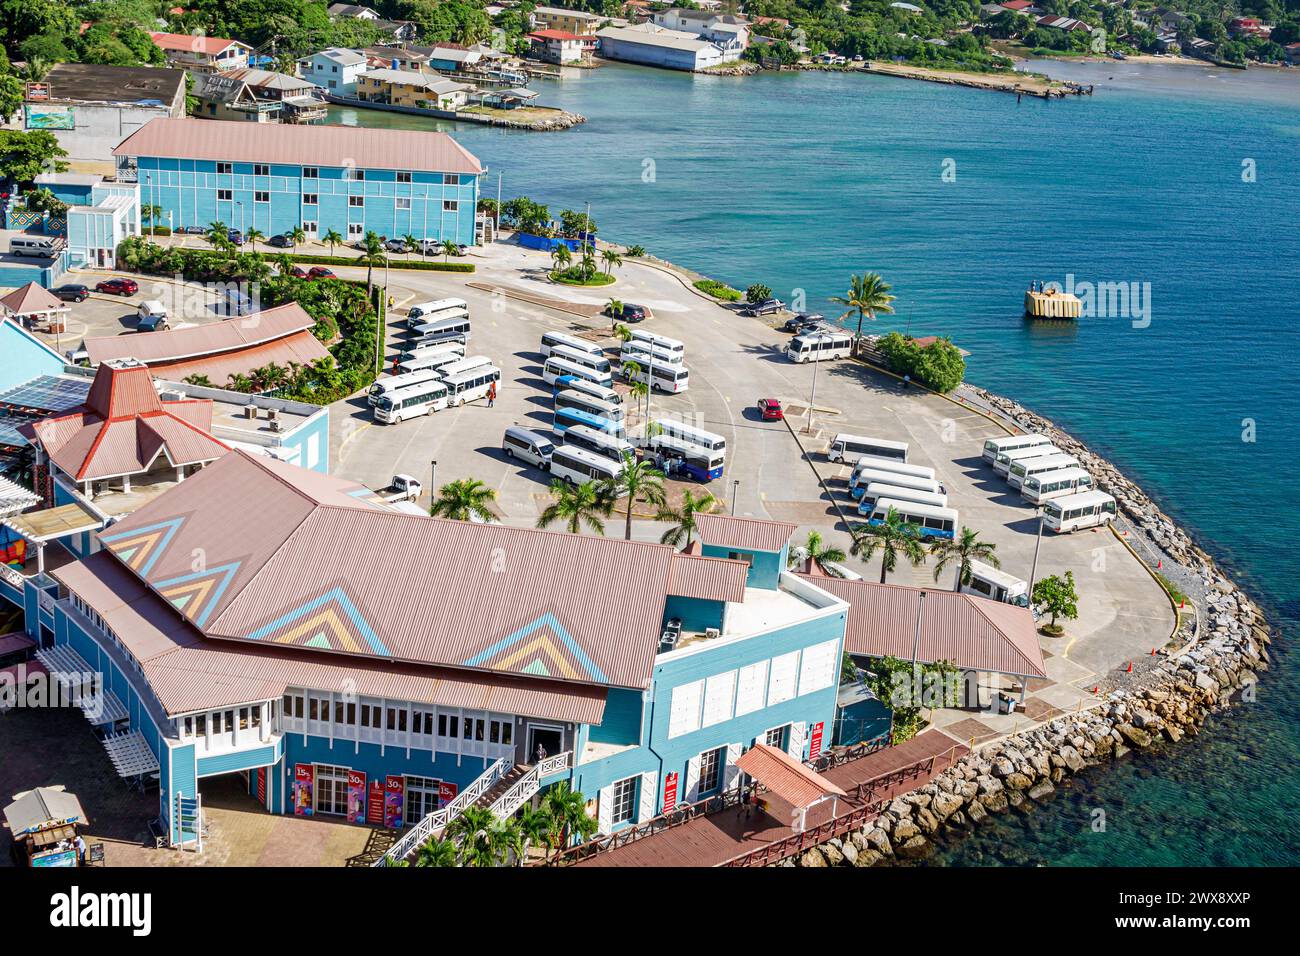 Port Roatan Honduras,Coxen Hole Bay Islands,Norwegian Joy Cruise Line ship,7-day Caribbean Sea itinerary,excursion buses motor coaches,parking lot,wat Stock Photo